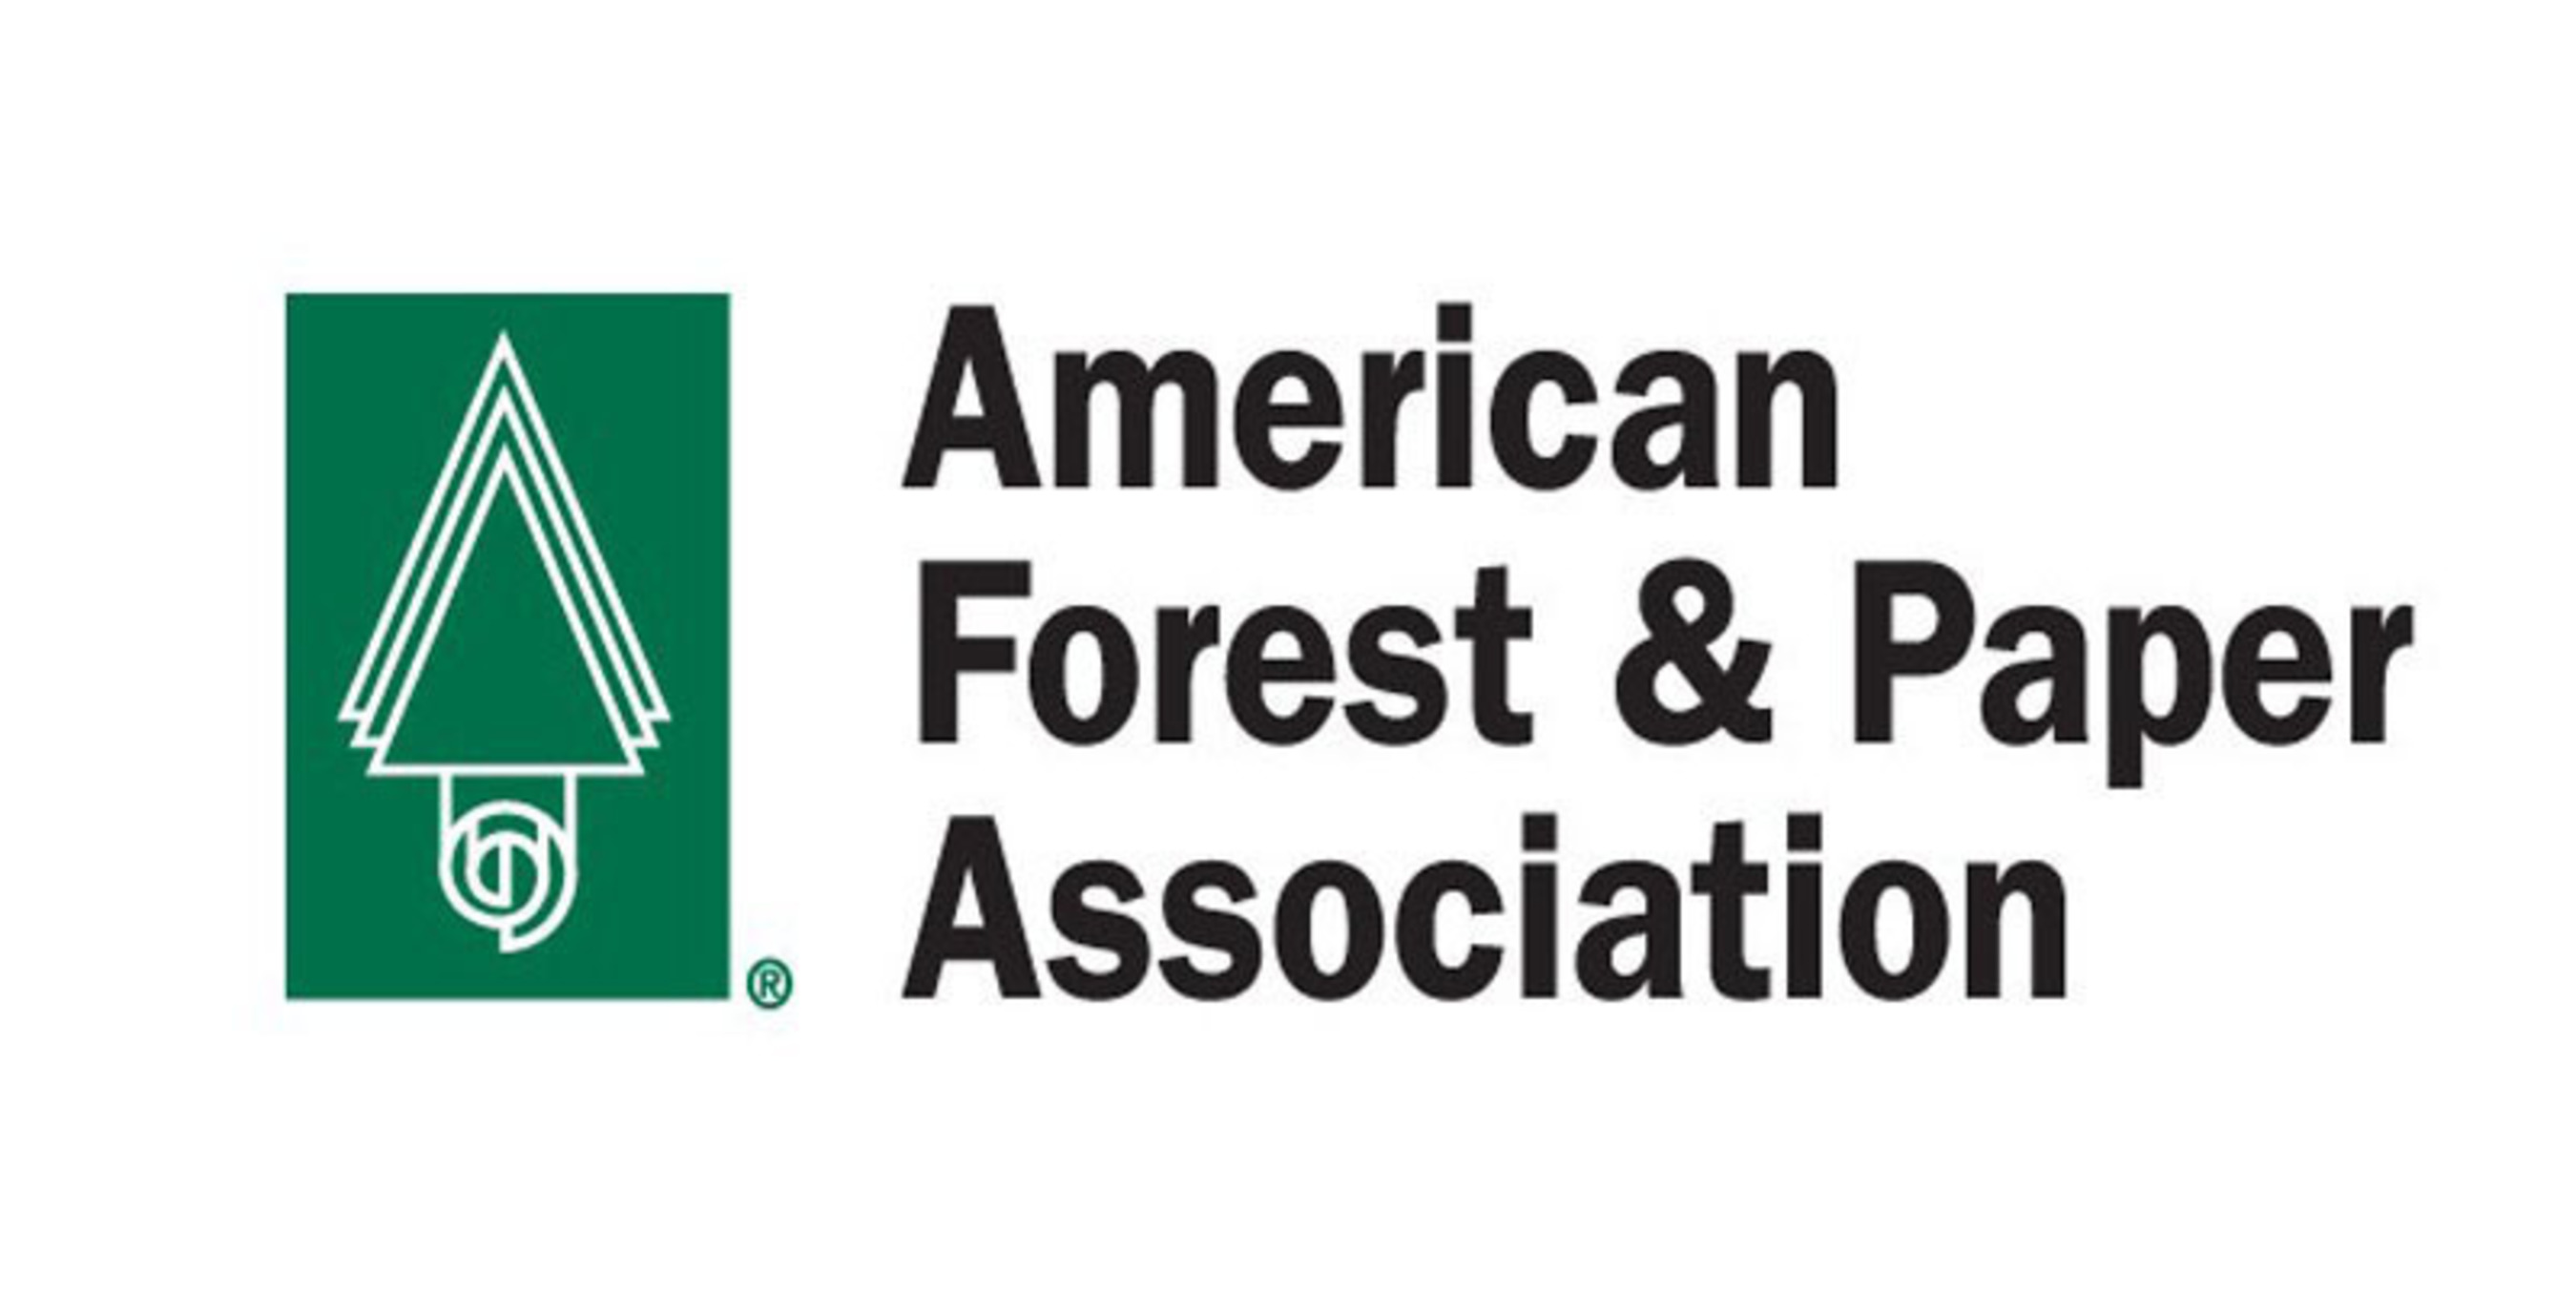 American Forest & Paper Association Logo.